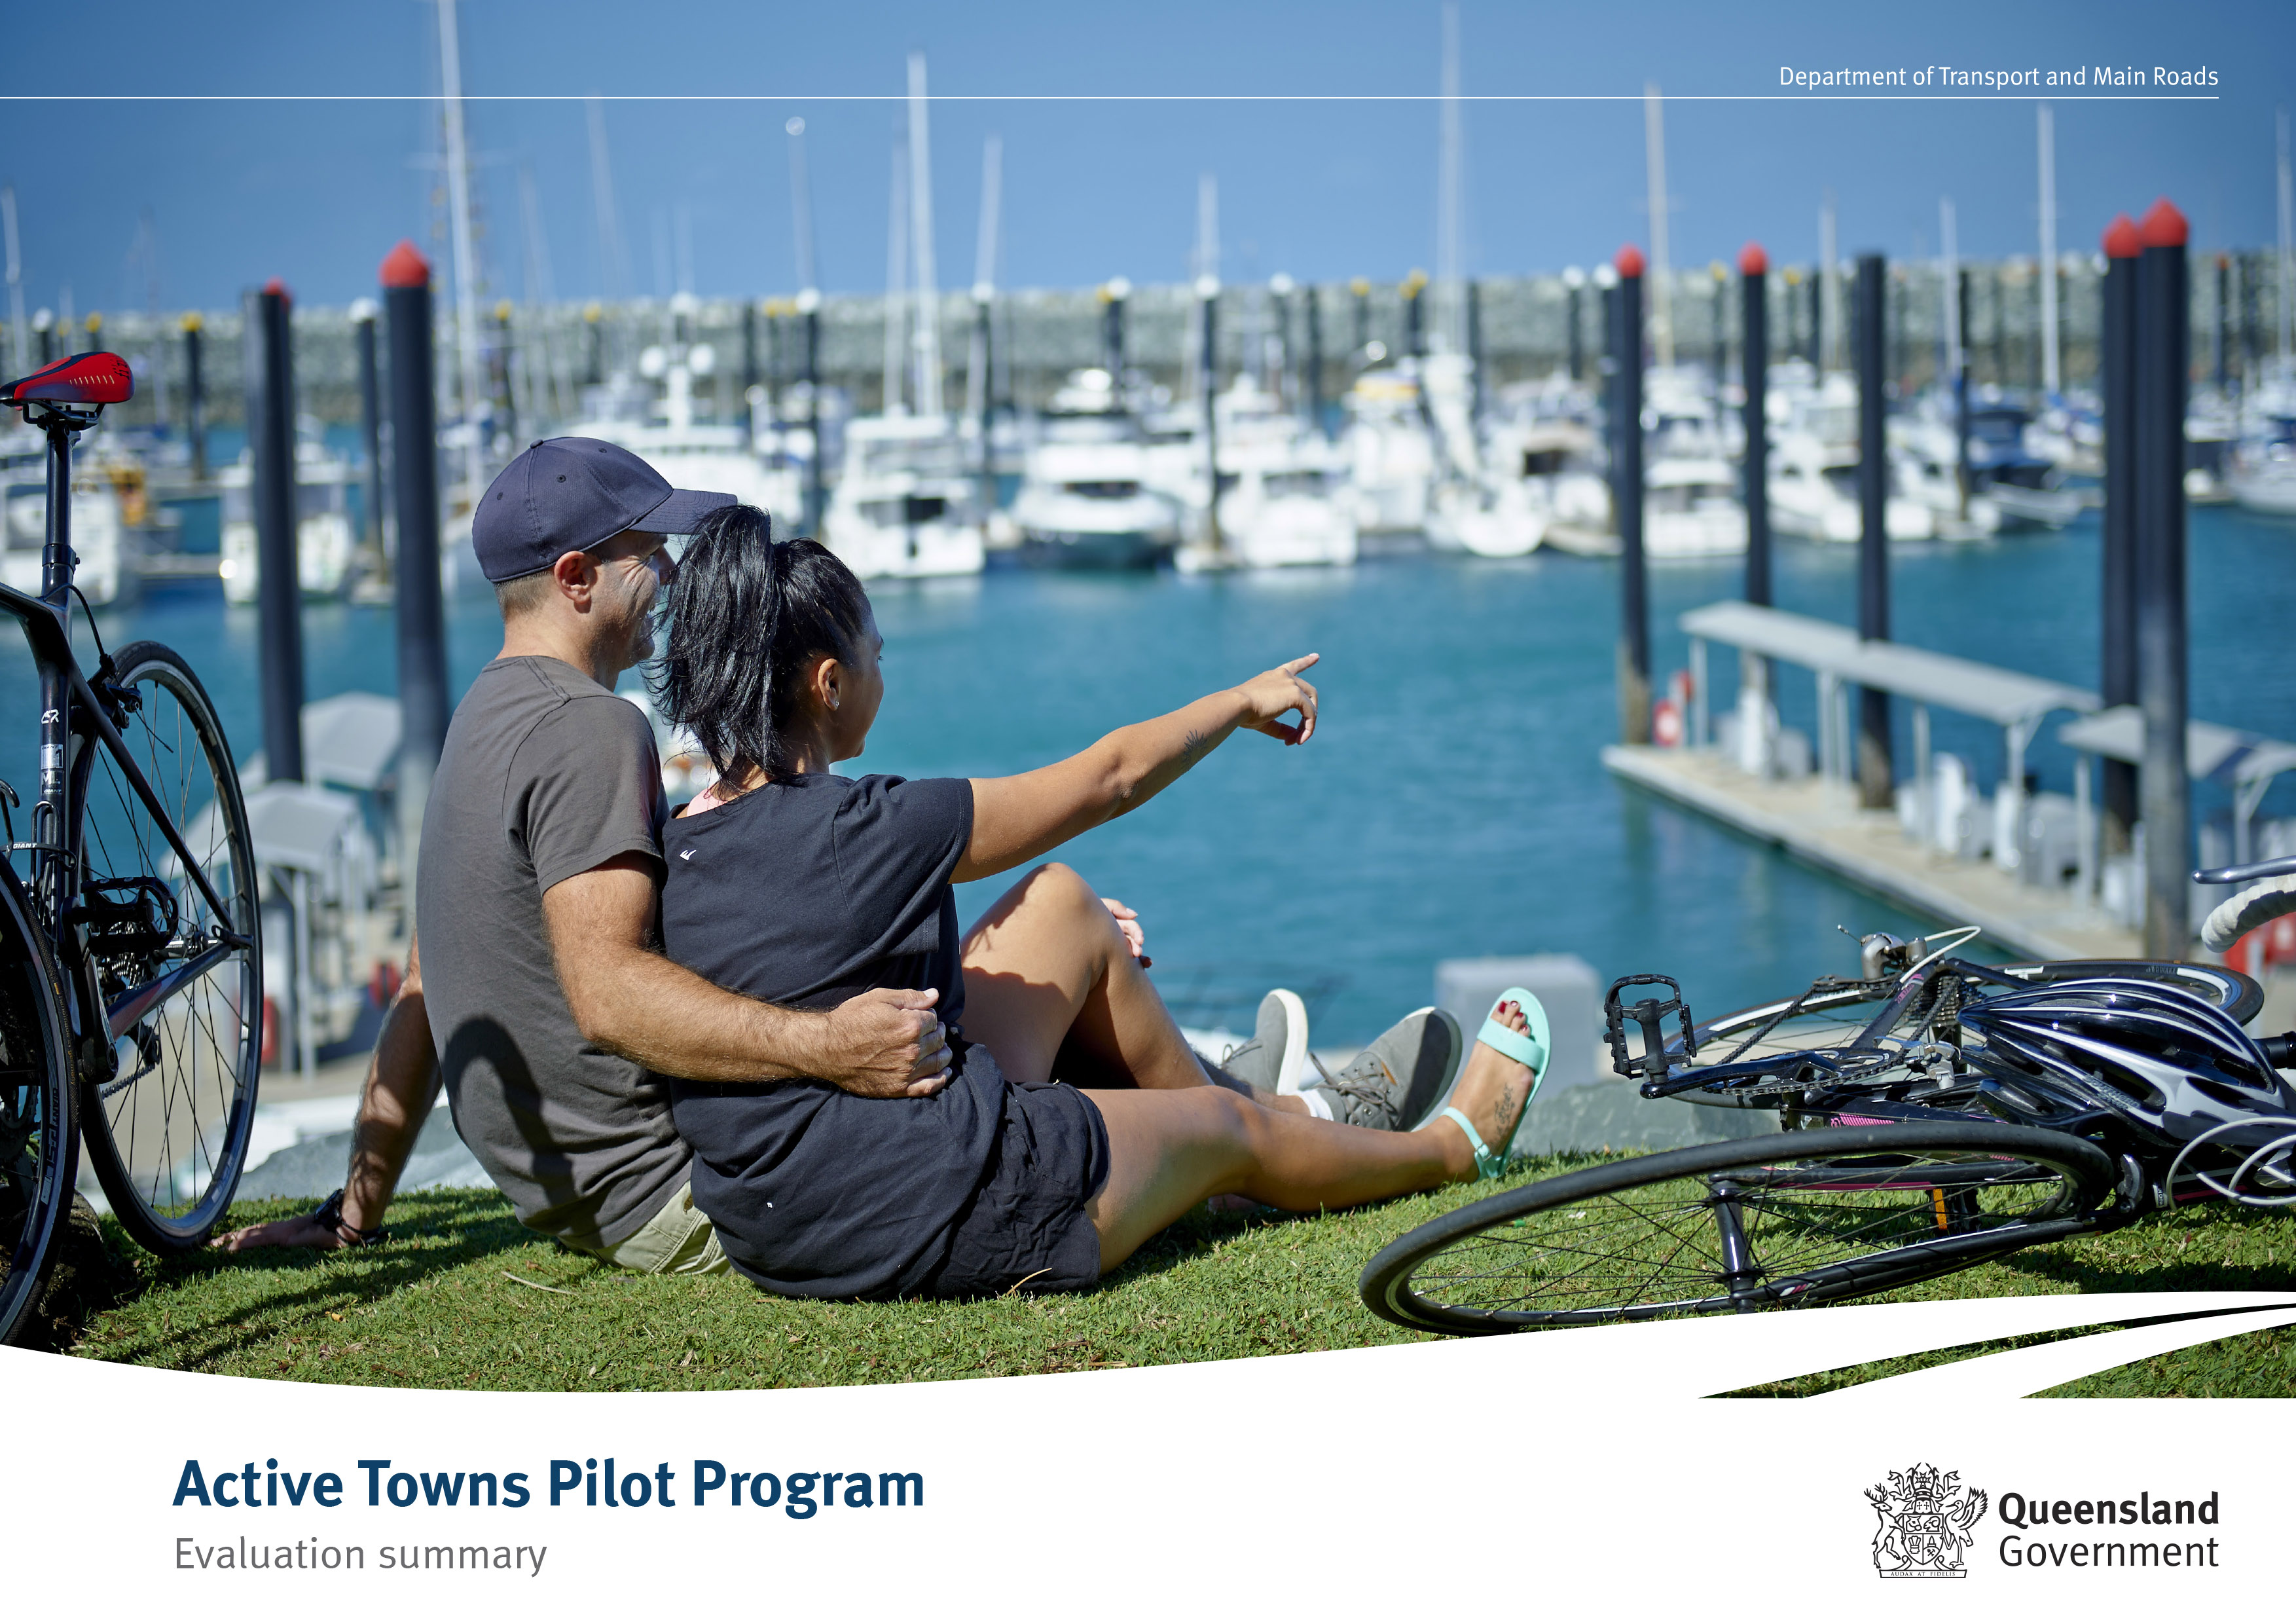 Active Towns pilot program summary
report